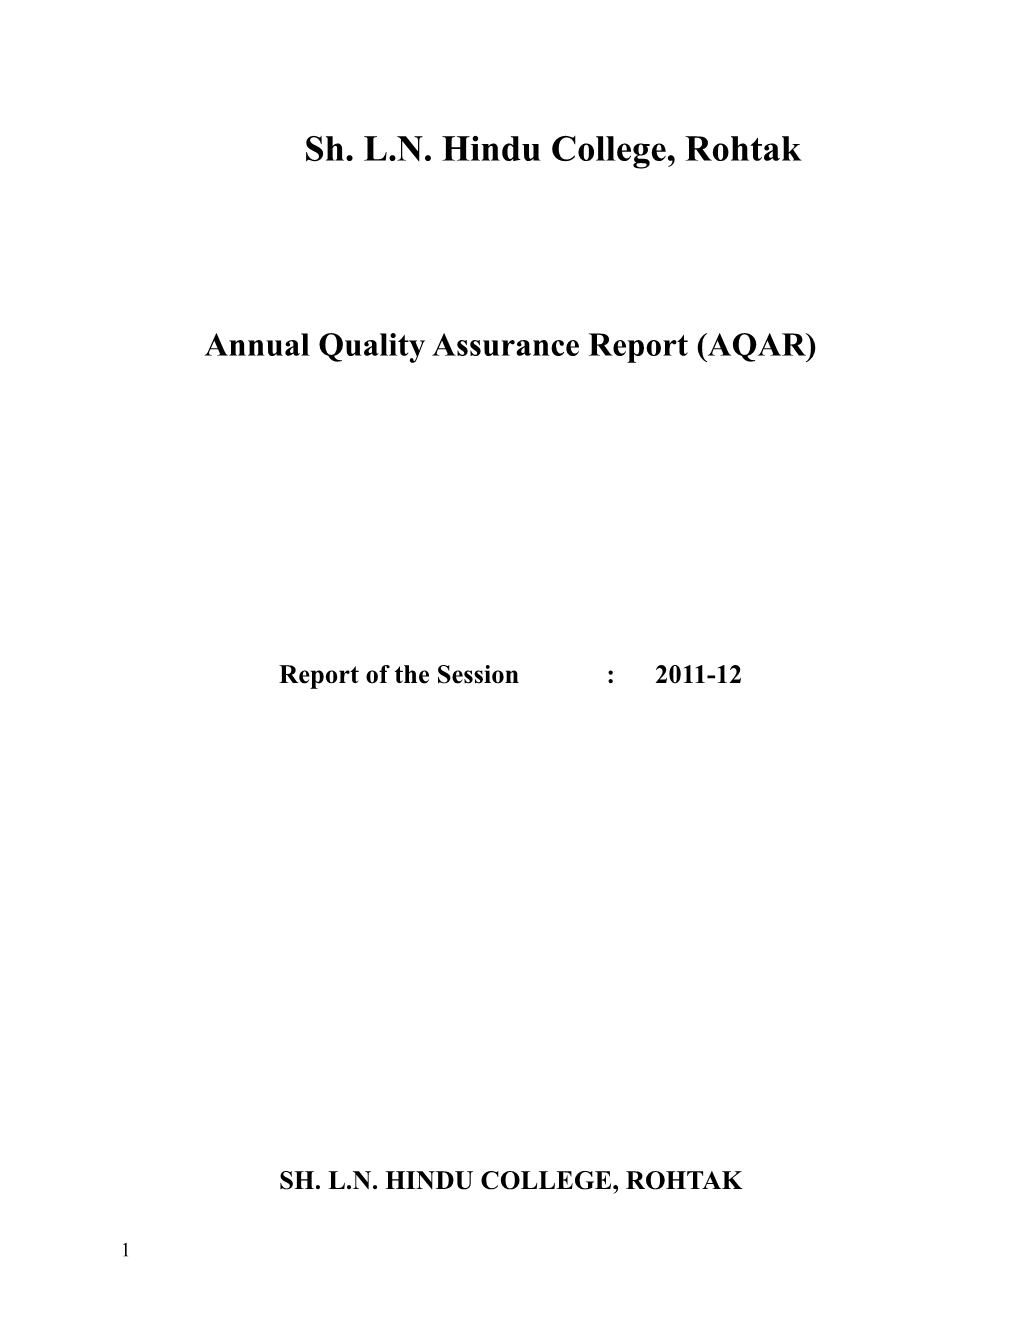 Annual Quality Assurance Report (AQAR)